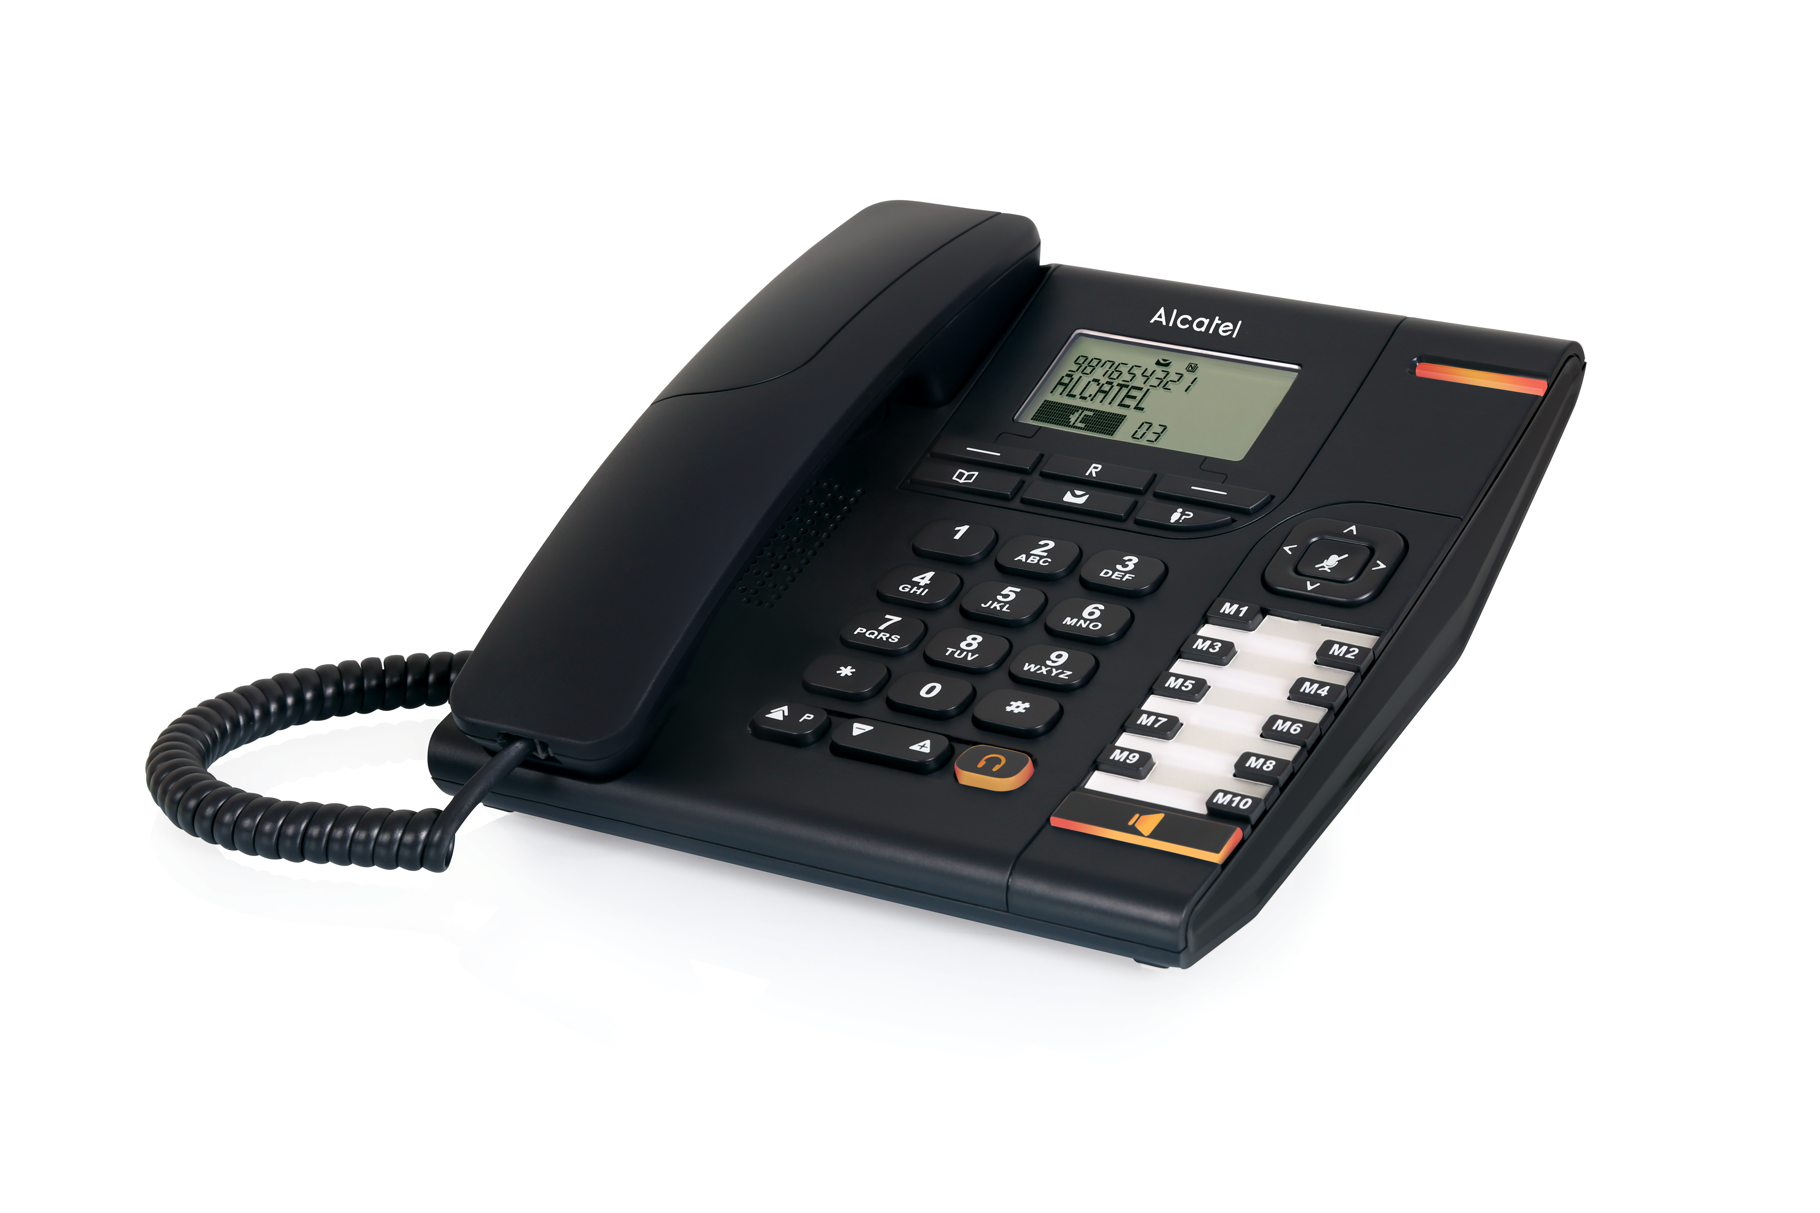 Alcatel Temporis 880 Analogue Phone in Black